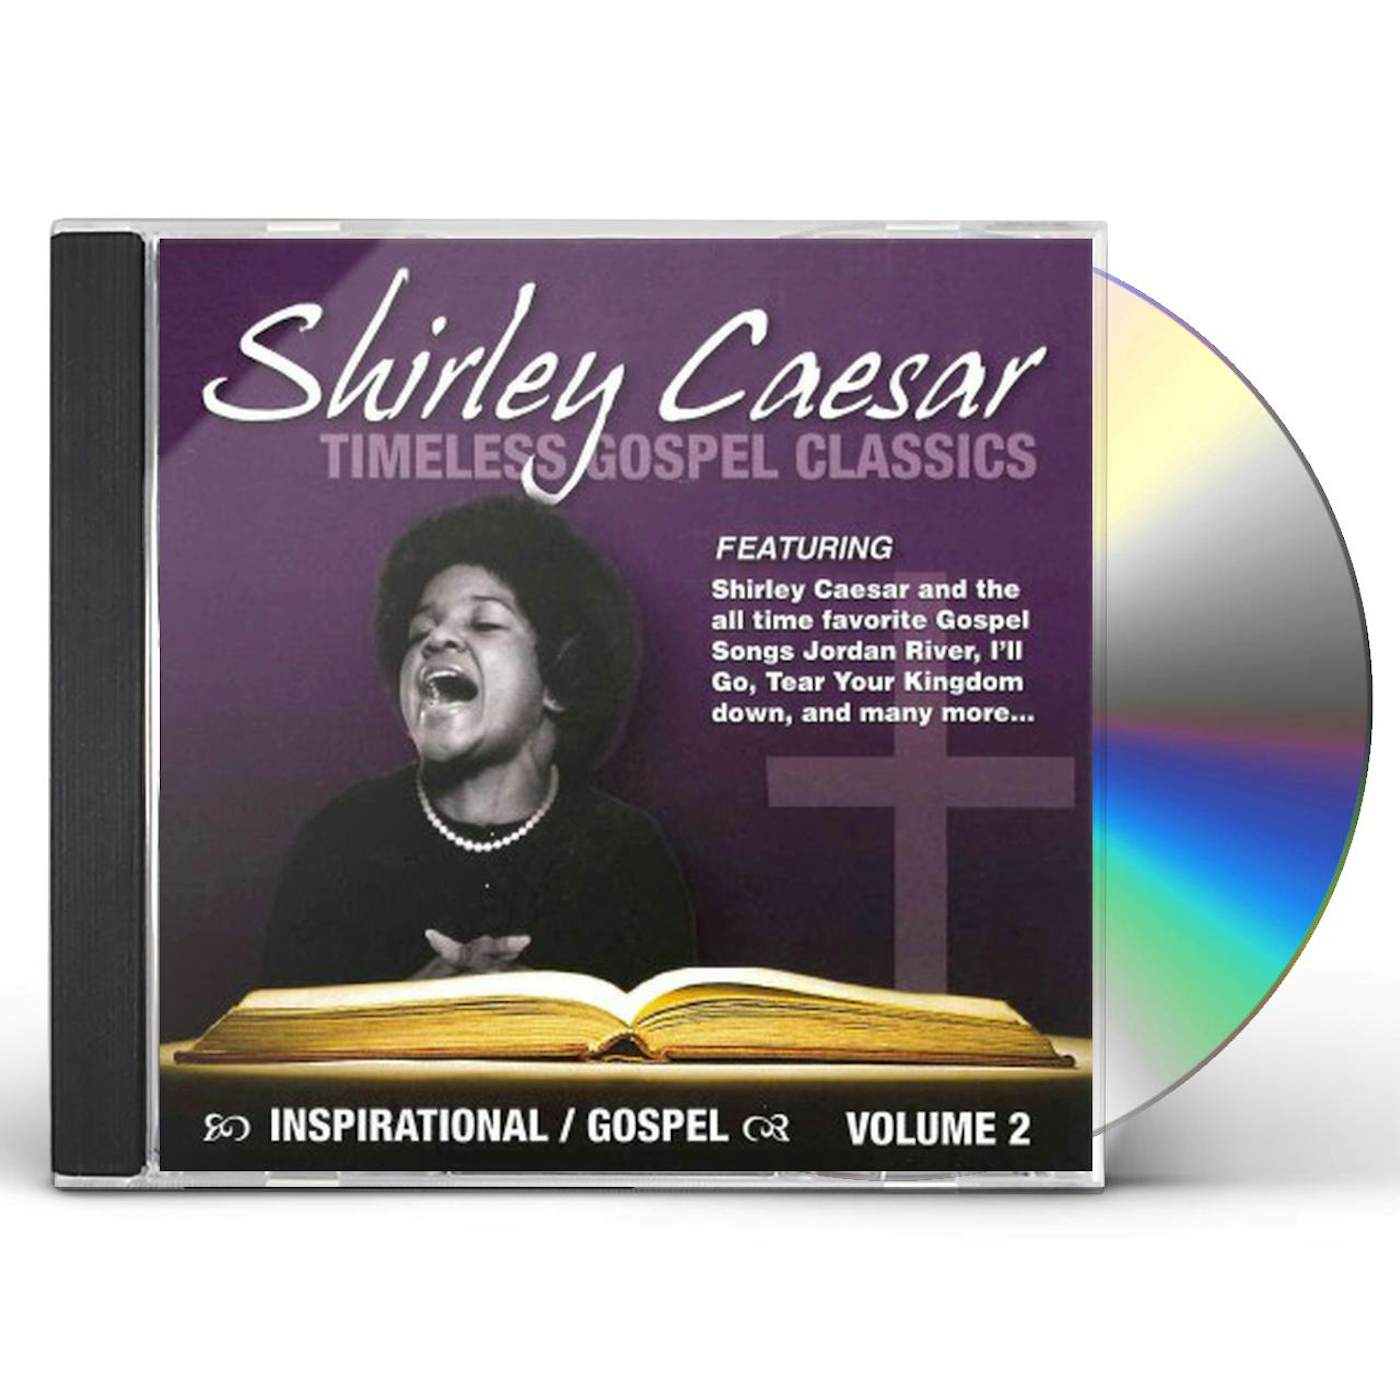 Shirley Caesar TIMELESS GOSPEL CLASSICS 2 CD